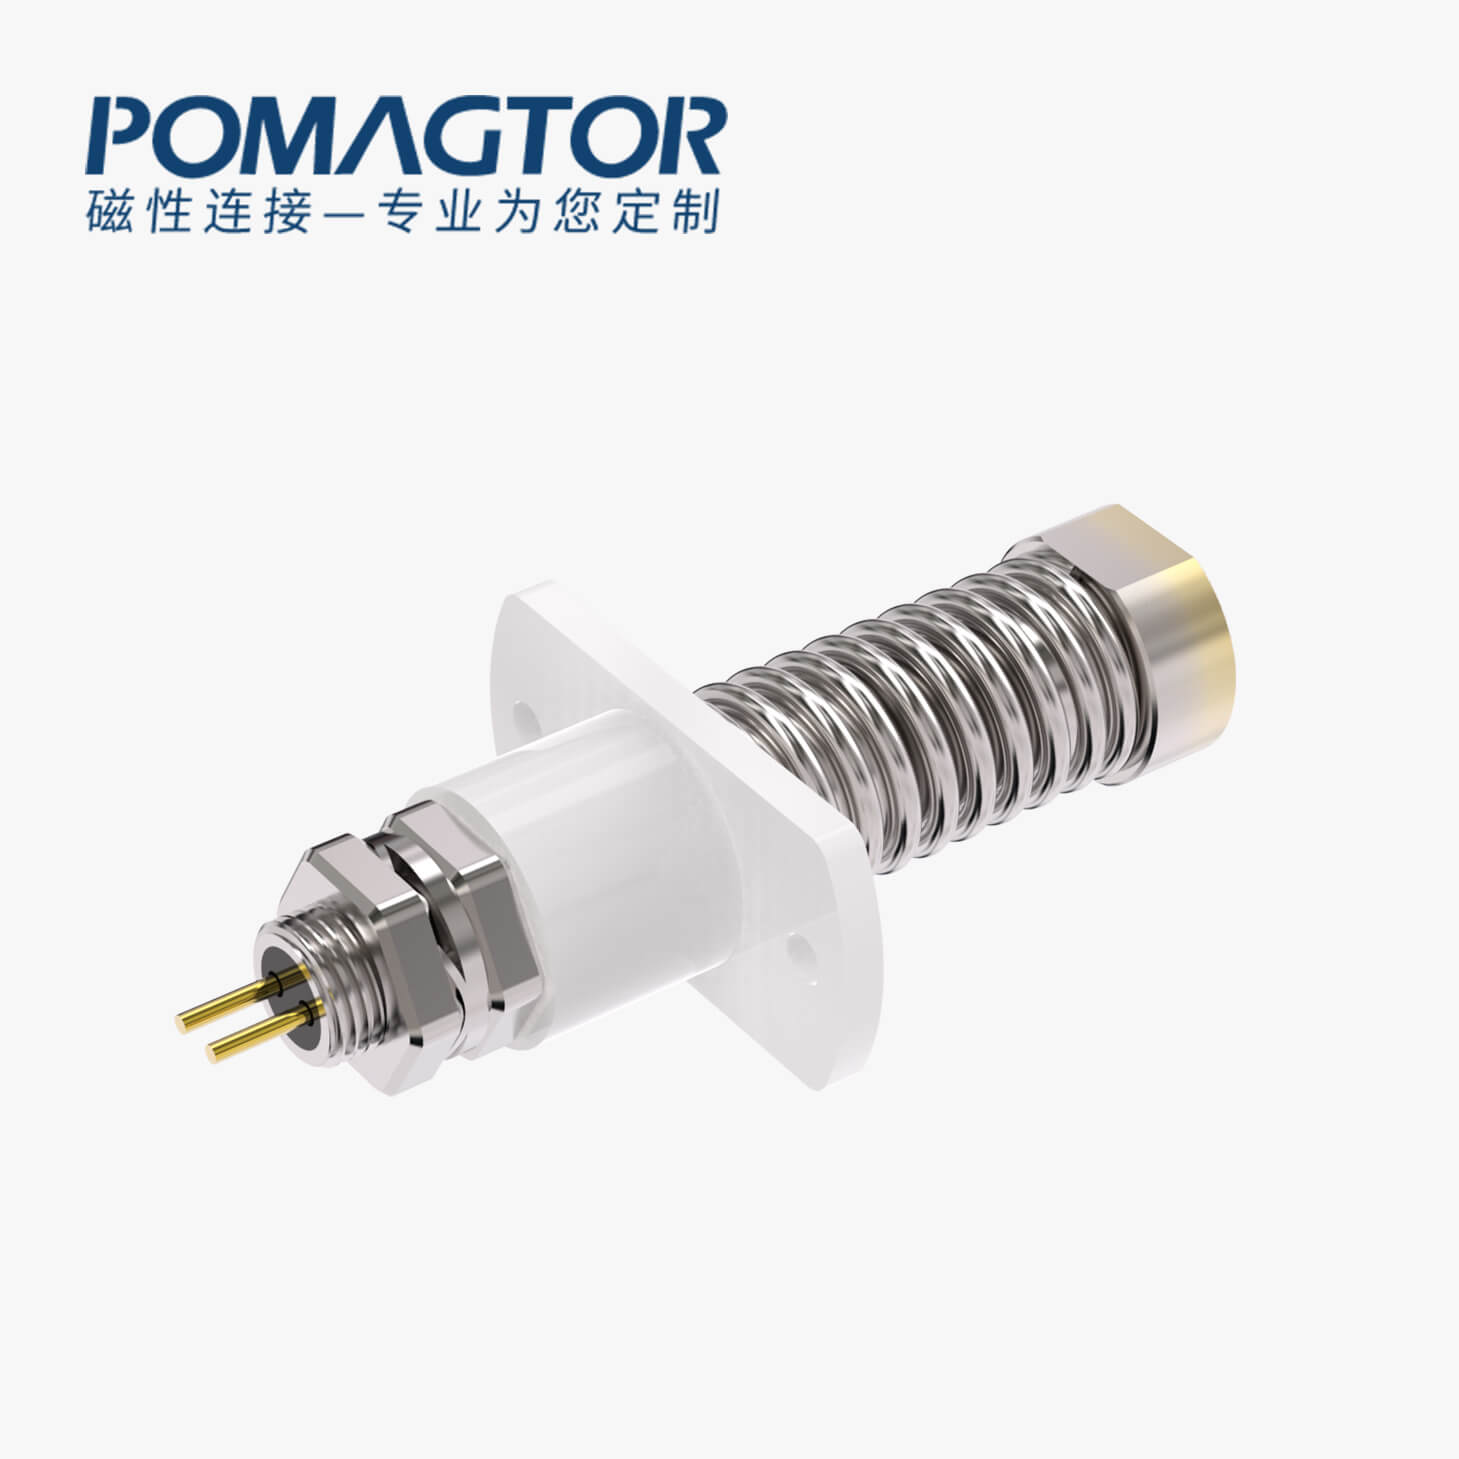 POGO PIN 大电流：电压220V，电流60A，工作行程6mm:300±50gf，弹力20000次+，工作温度-30°~85°